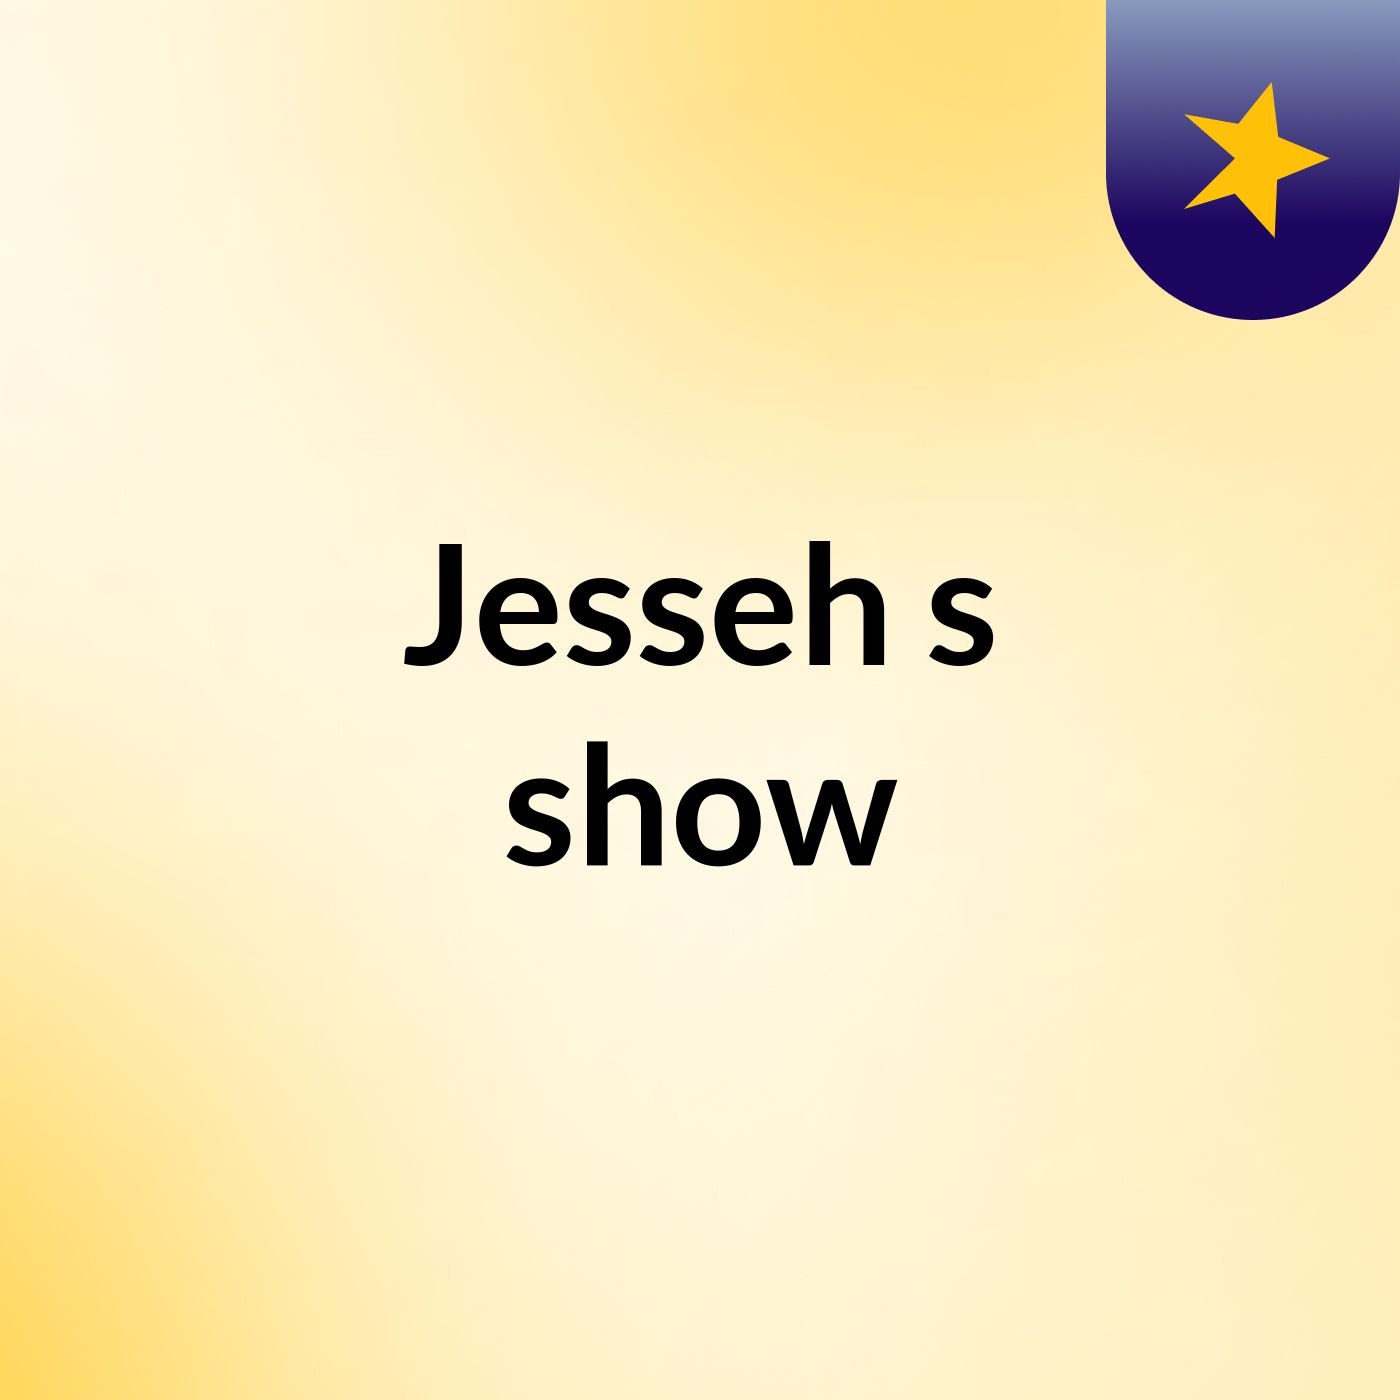 Jesseh's show